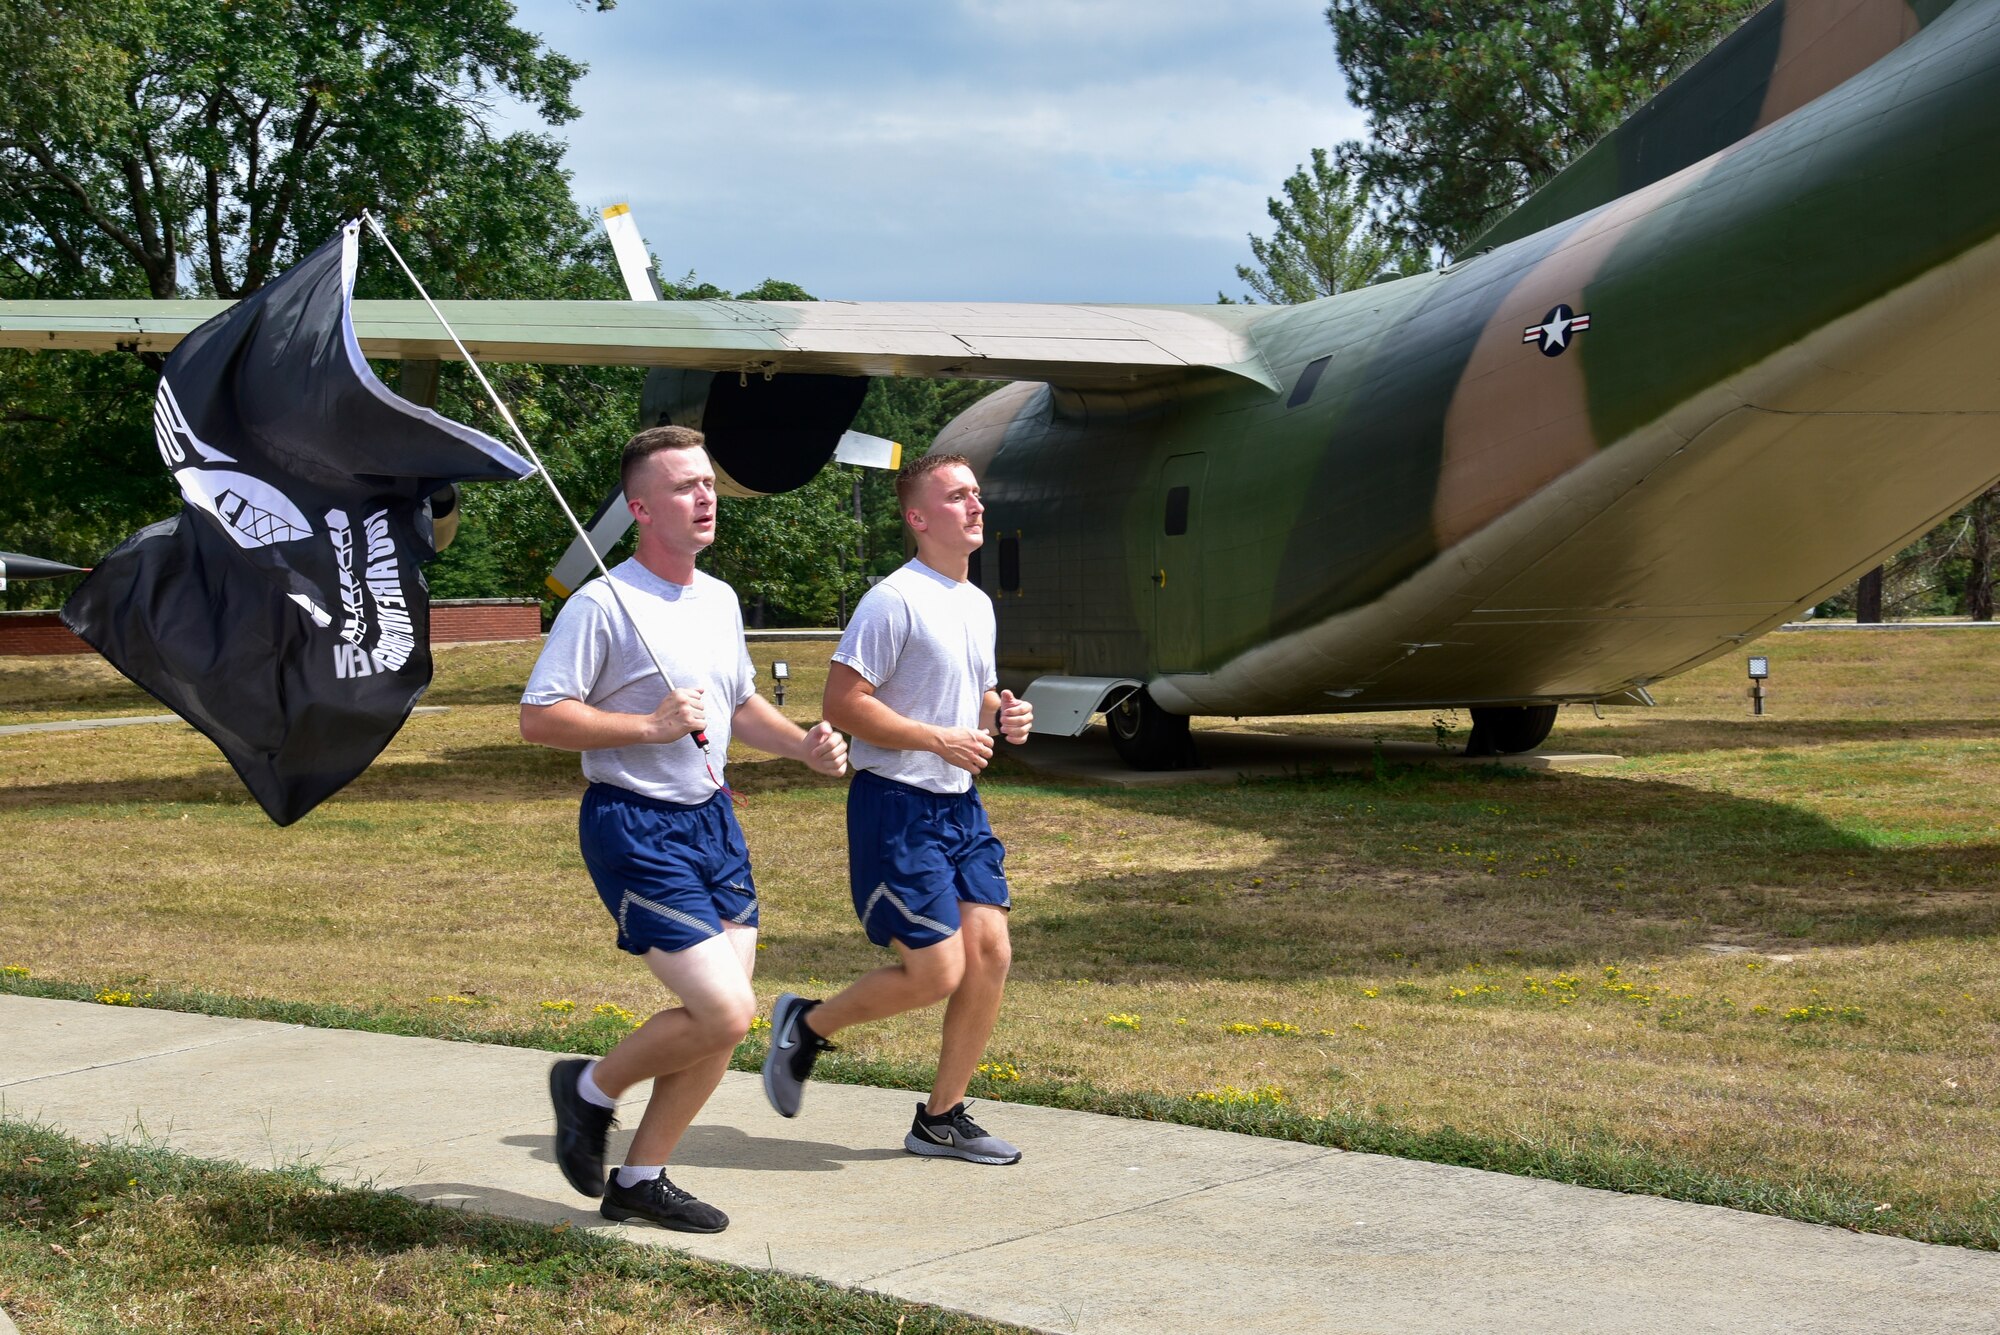 Airmen run carrying the POW/MIA flag